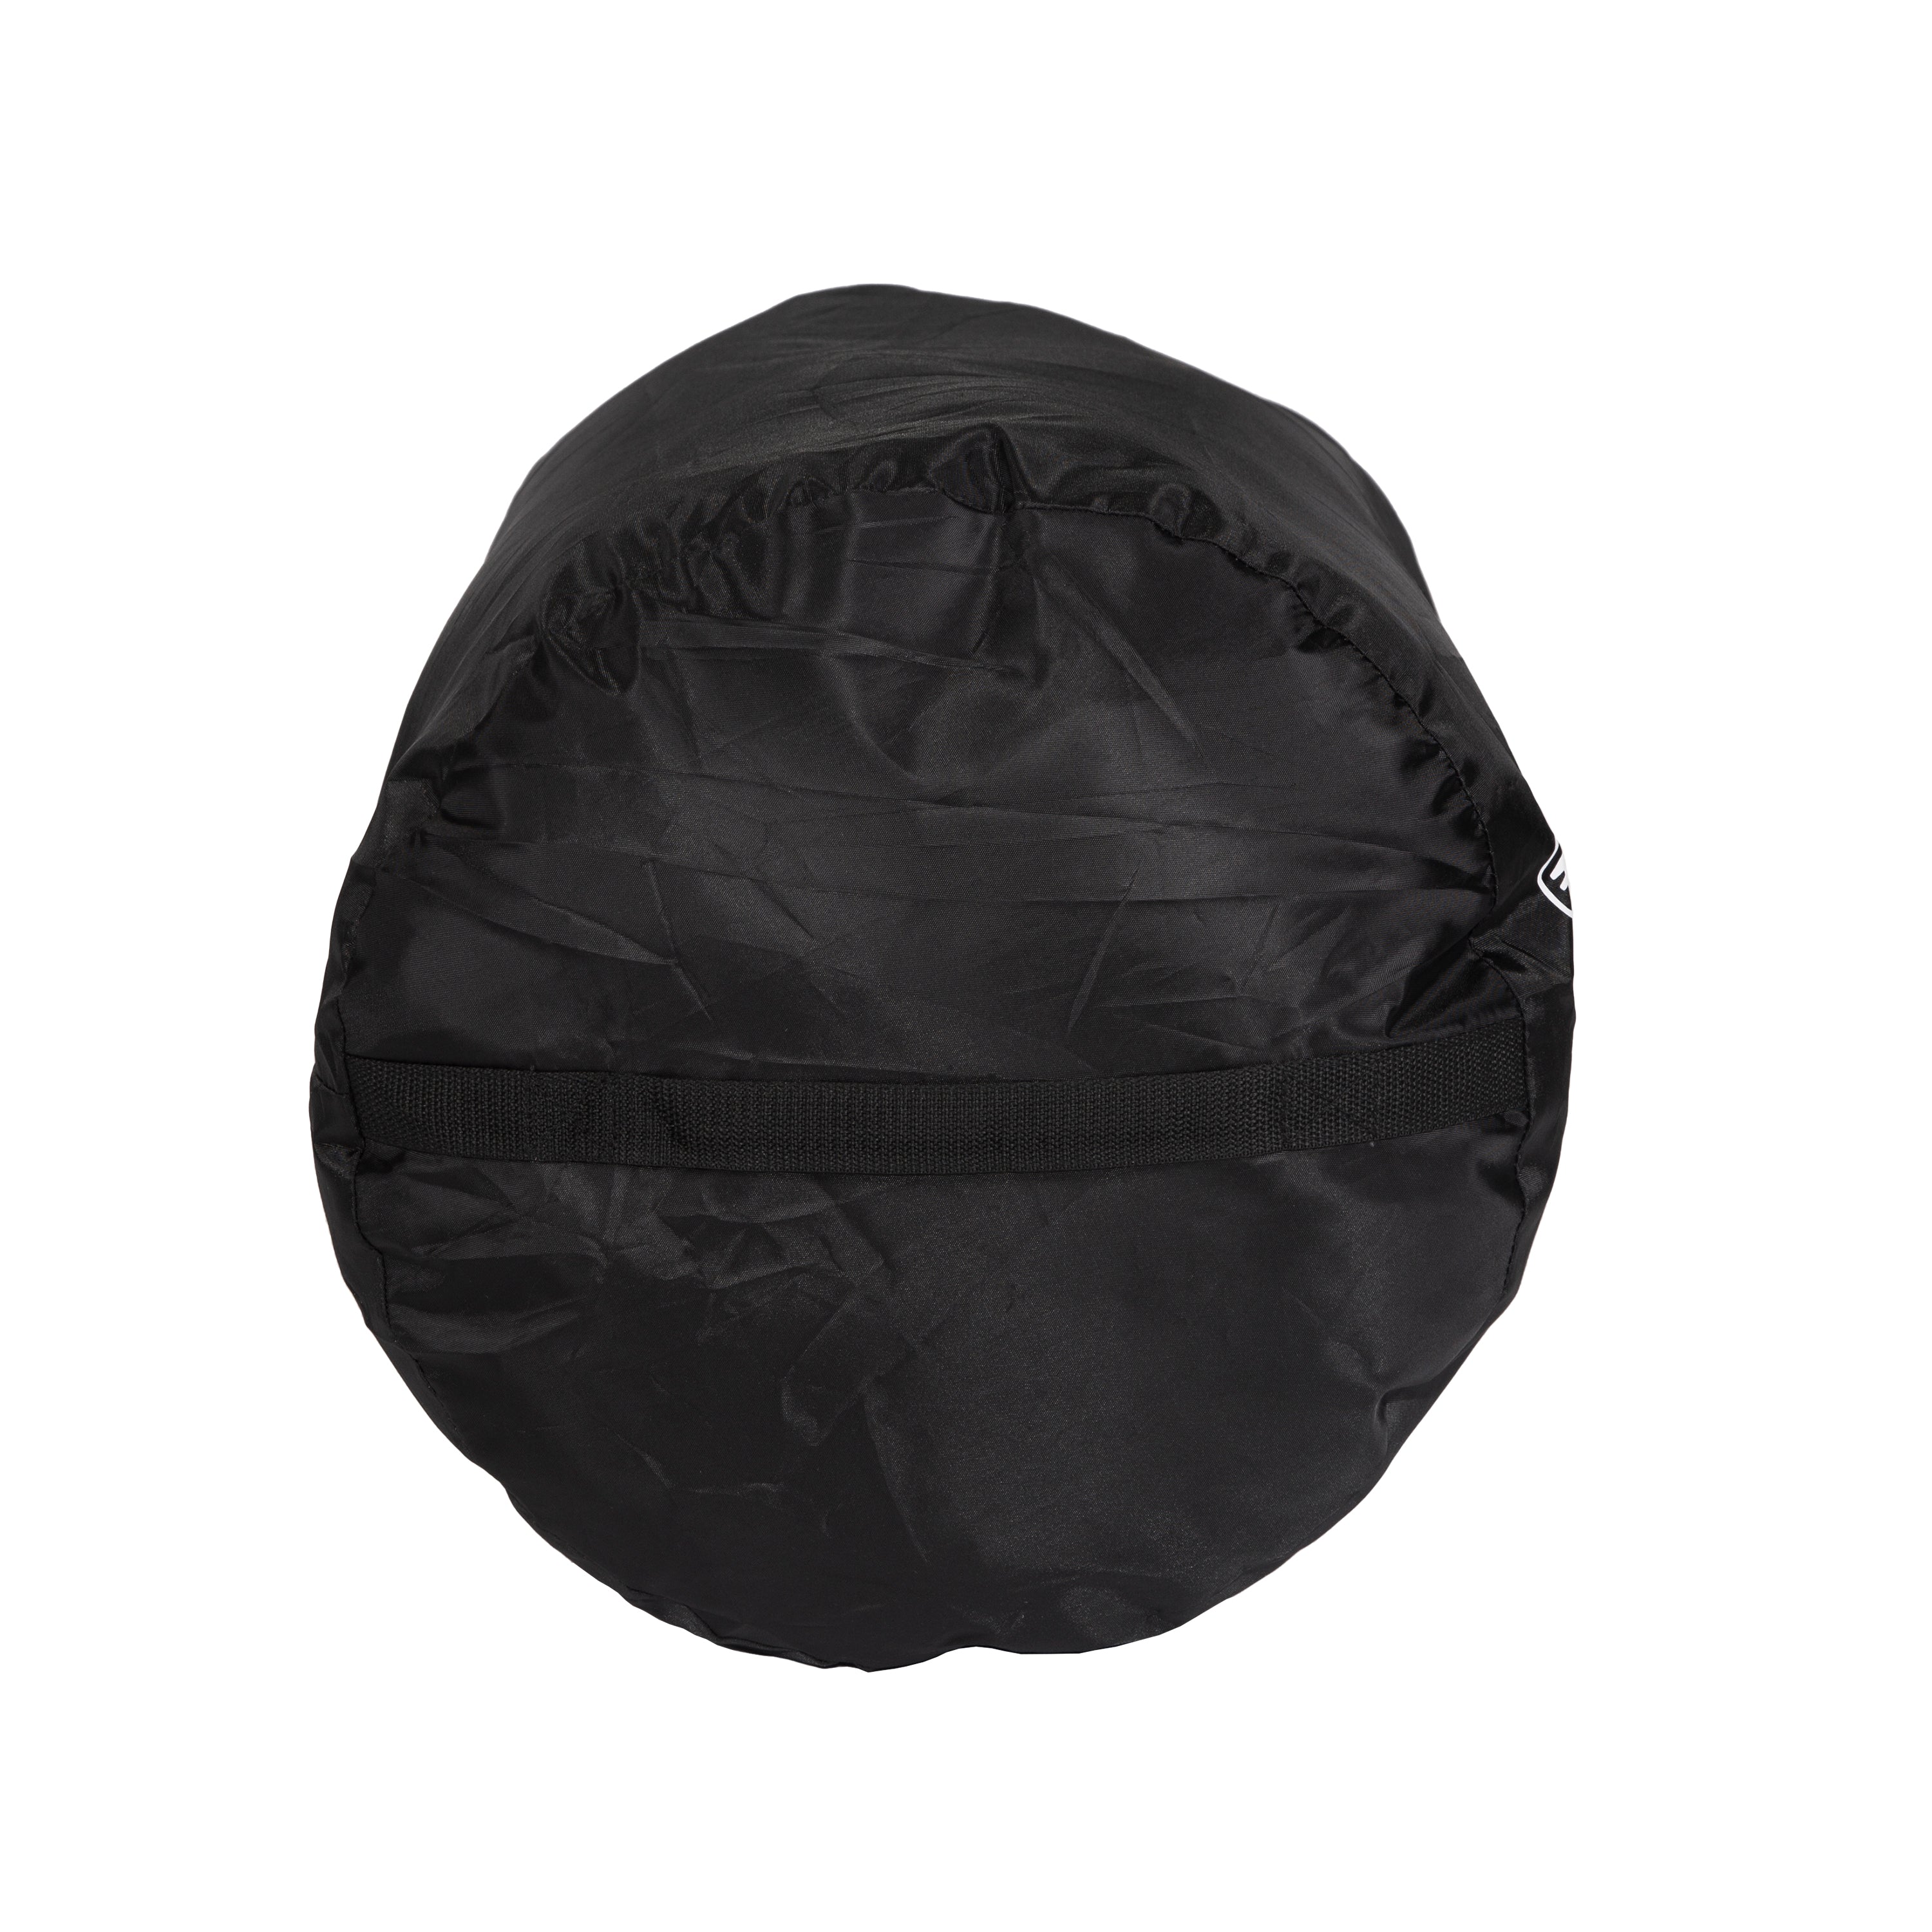 Stuff Bags -14 In X 24 In - Black